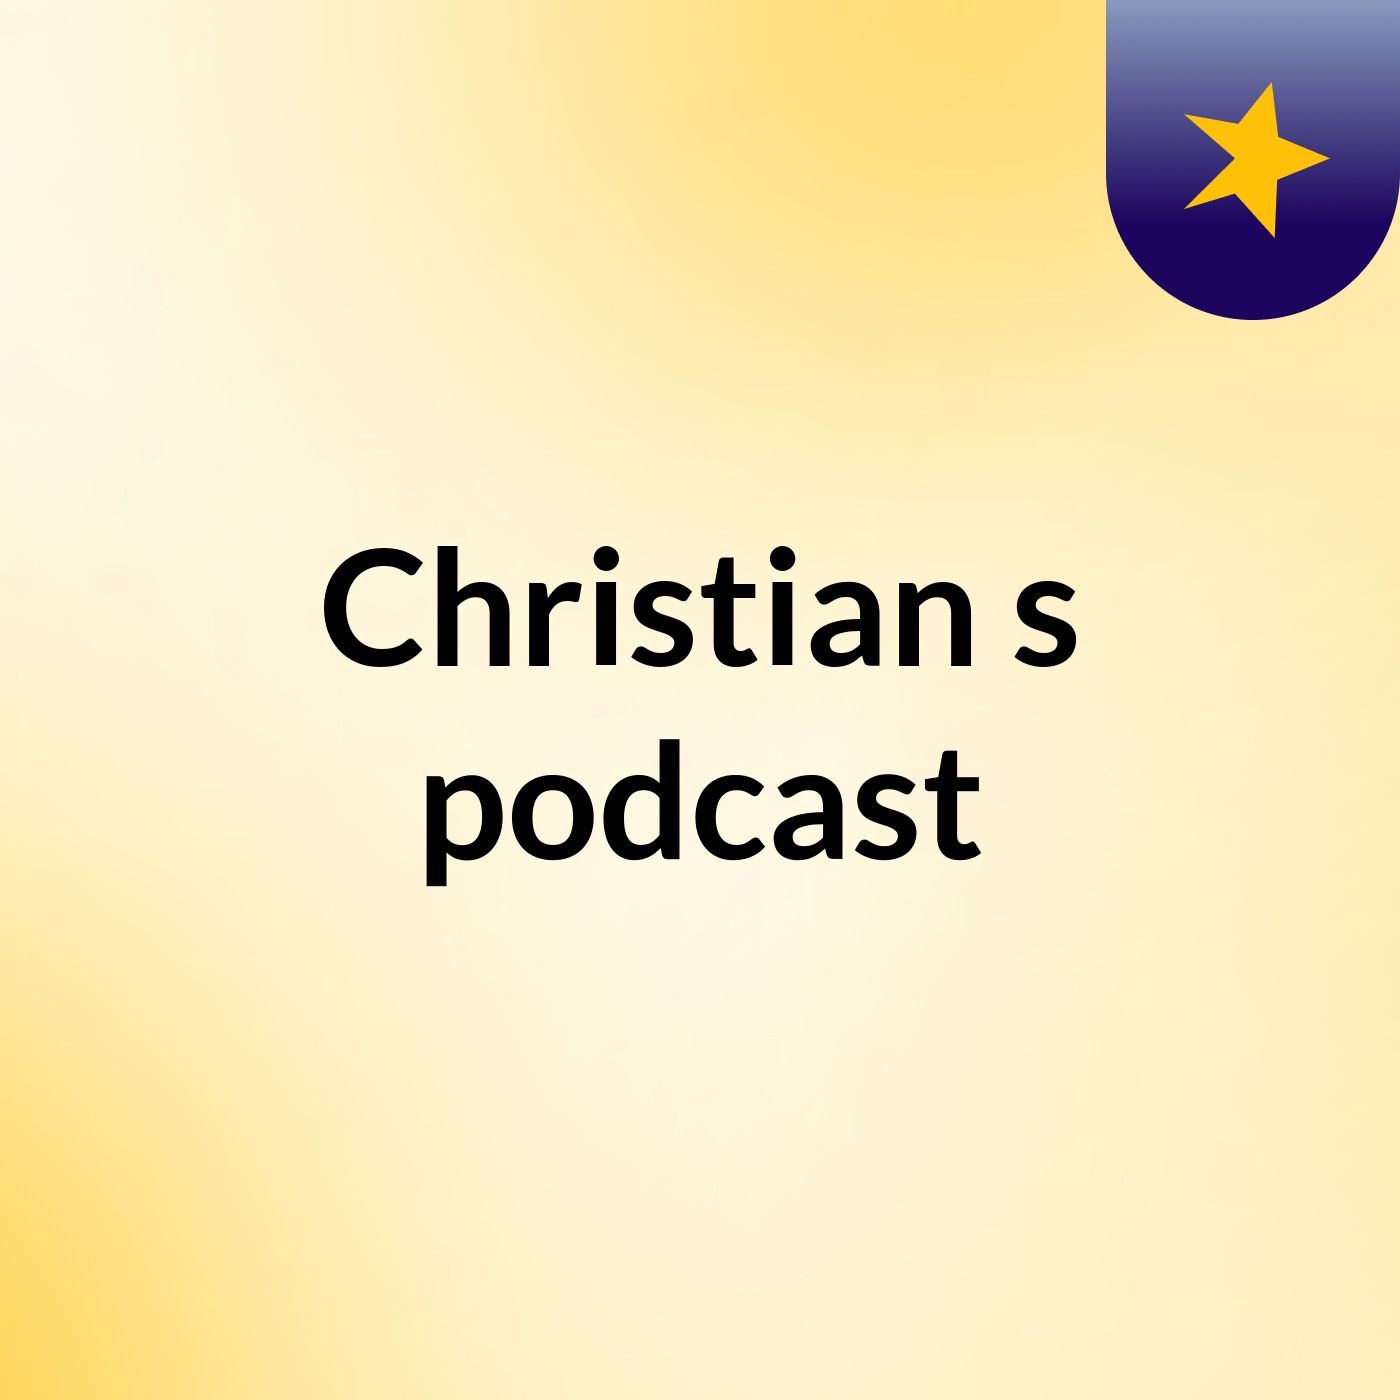 Christian's podcast